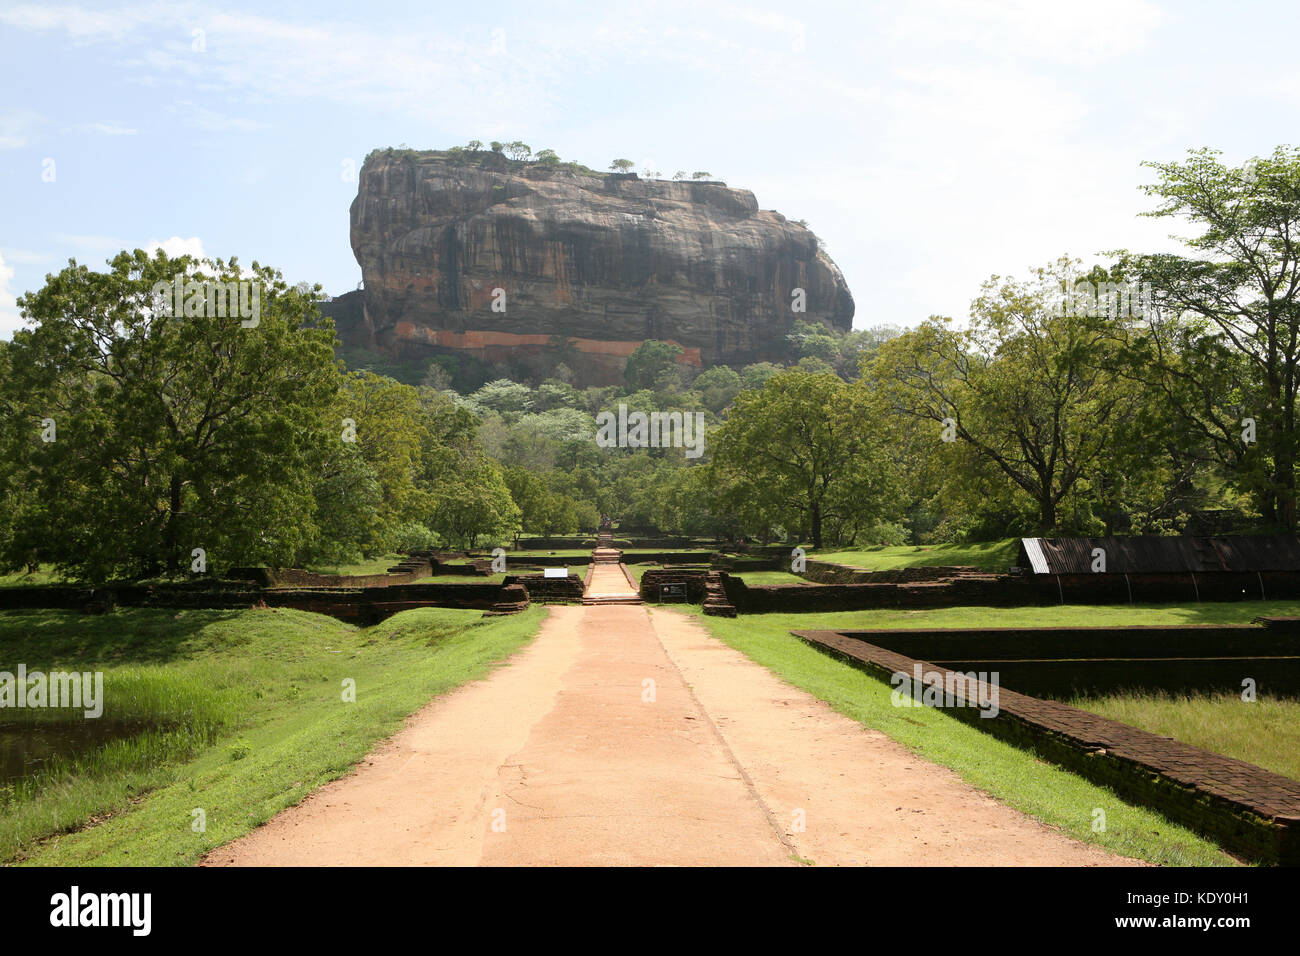 Sigiriya Lion Rock Festung in Sri Lanka mit Wandmalereien - Patrimonio Mondiale dell'UNESCO Foto Stock